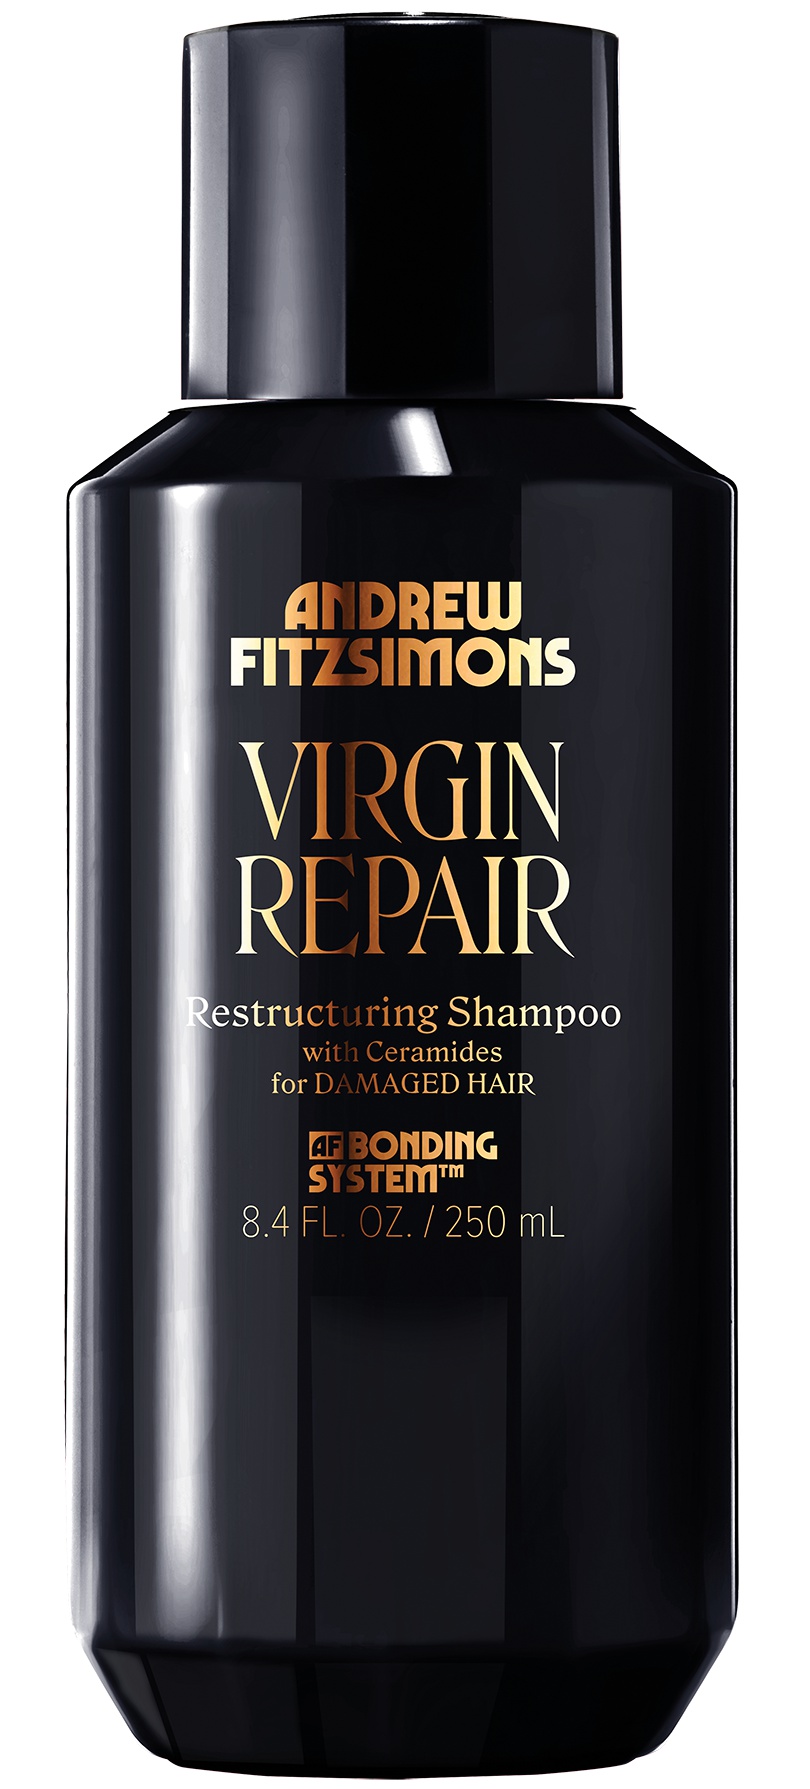 Andrew Fitzsimons Virgin Repair Restructuring Shampoo